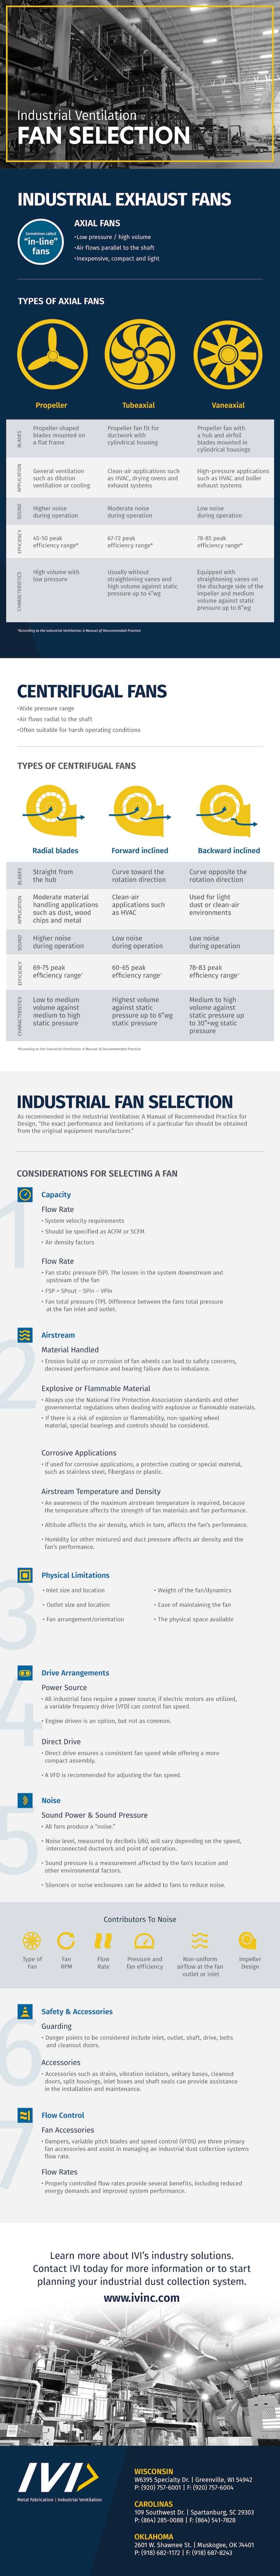 Infographic on choosing an industrial ventilation fan